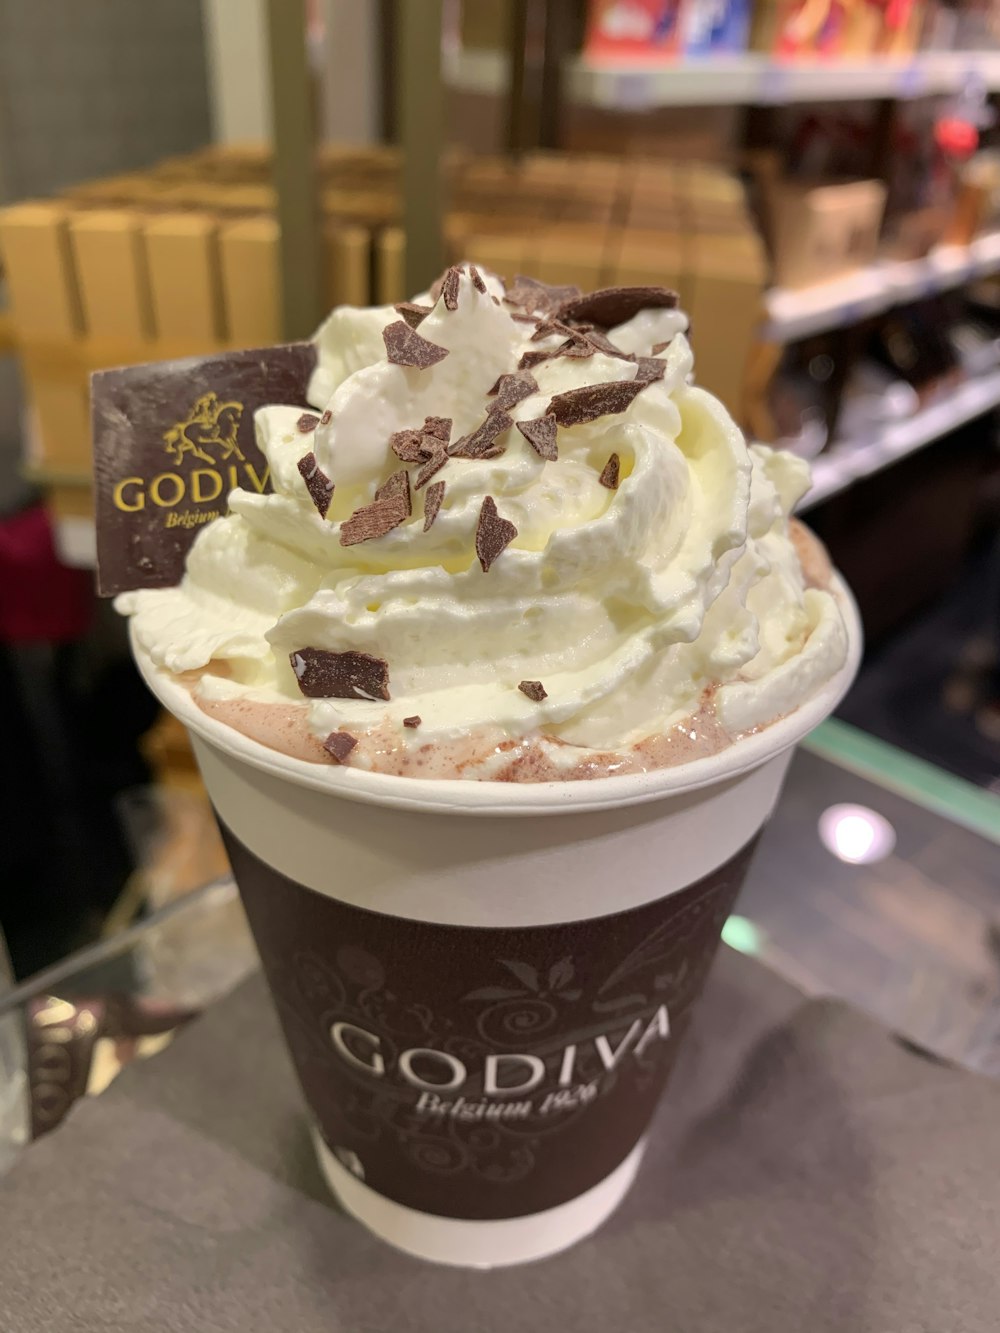 Godiva ice cream in cup